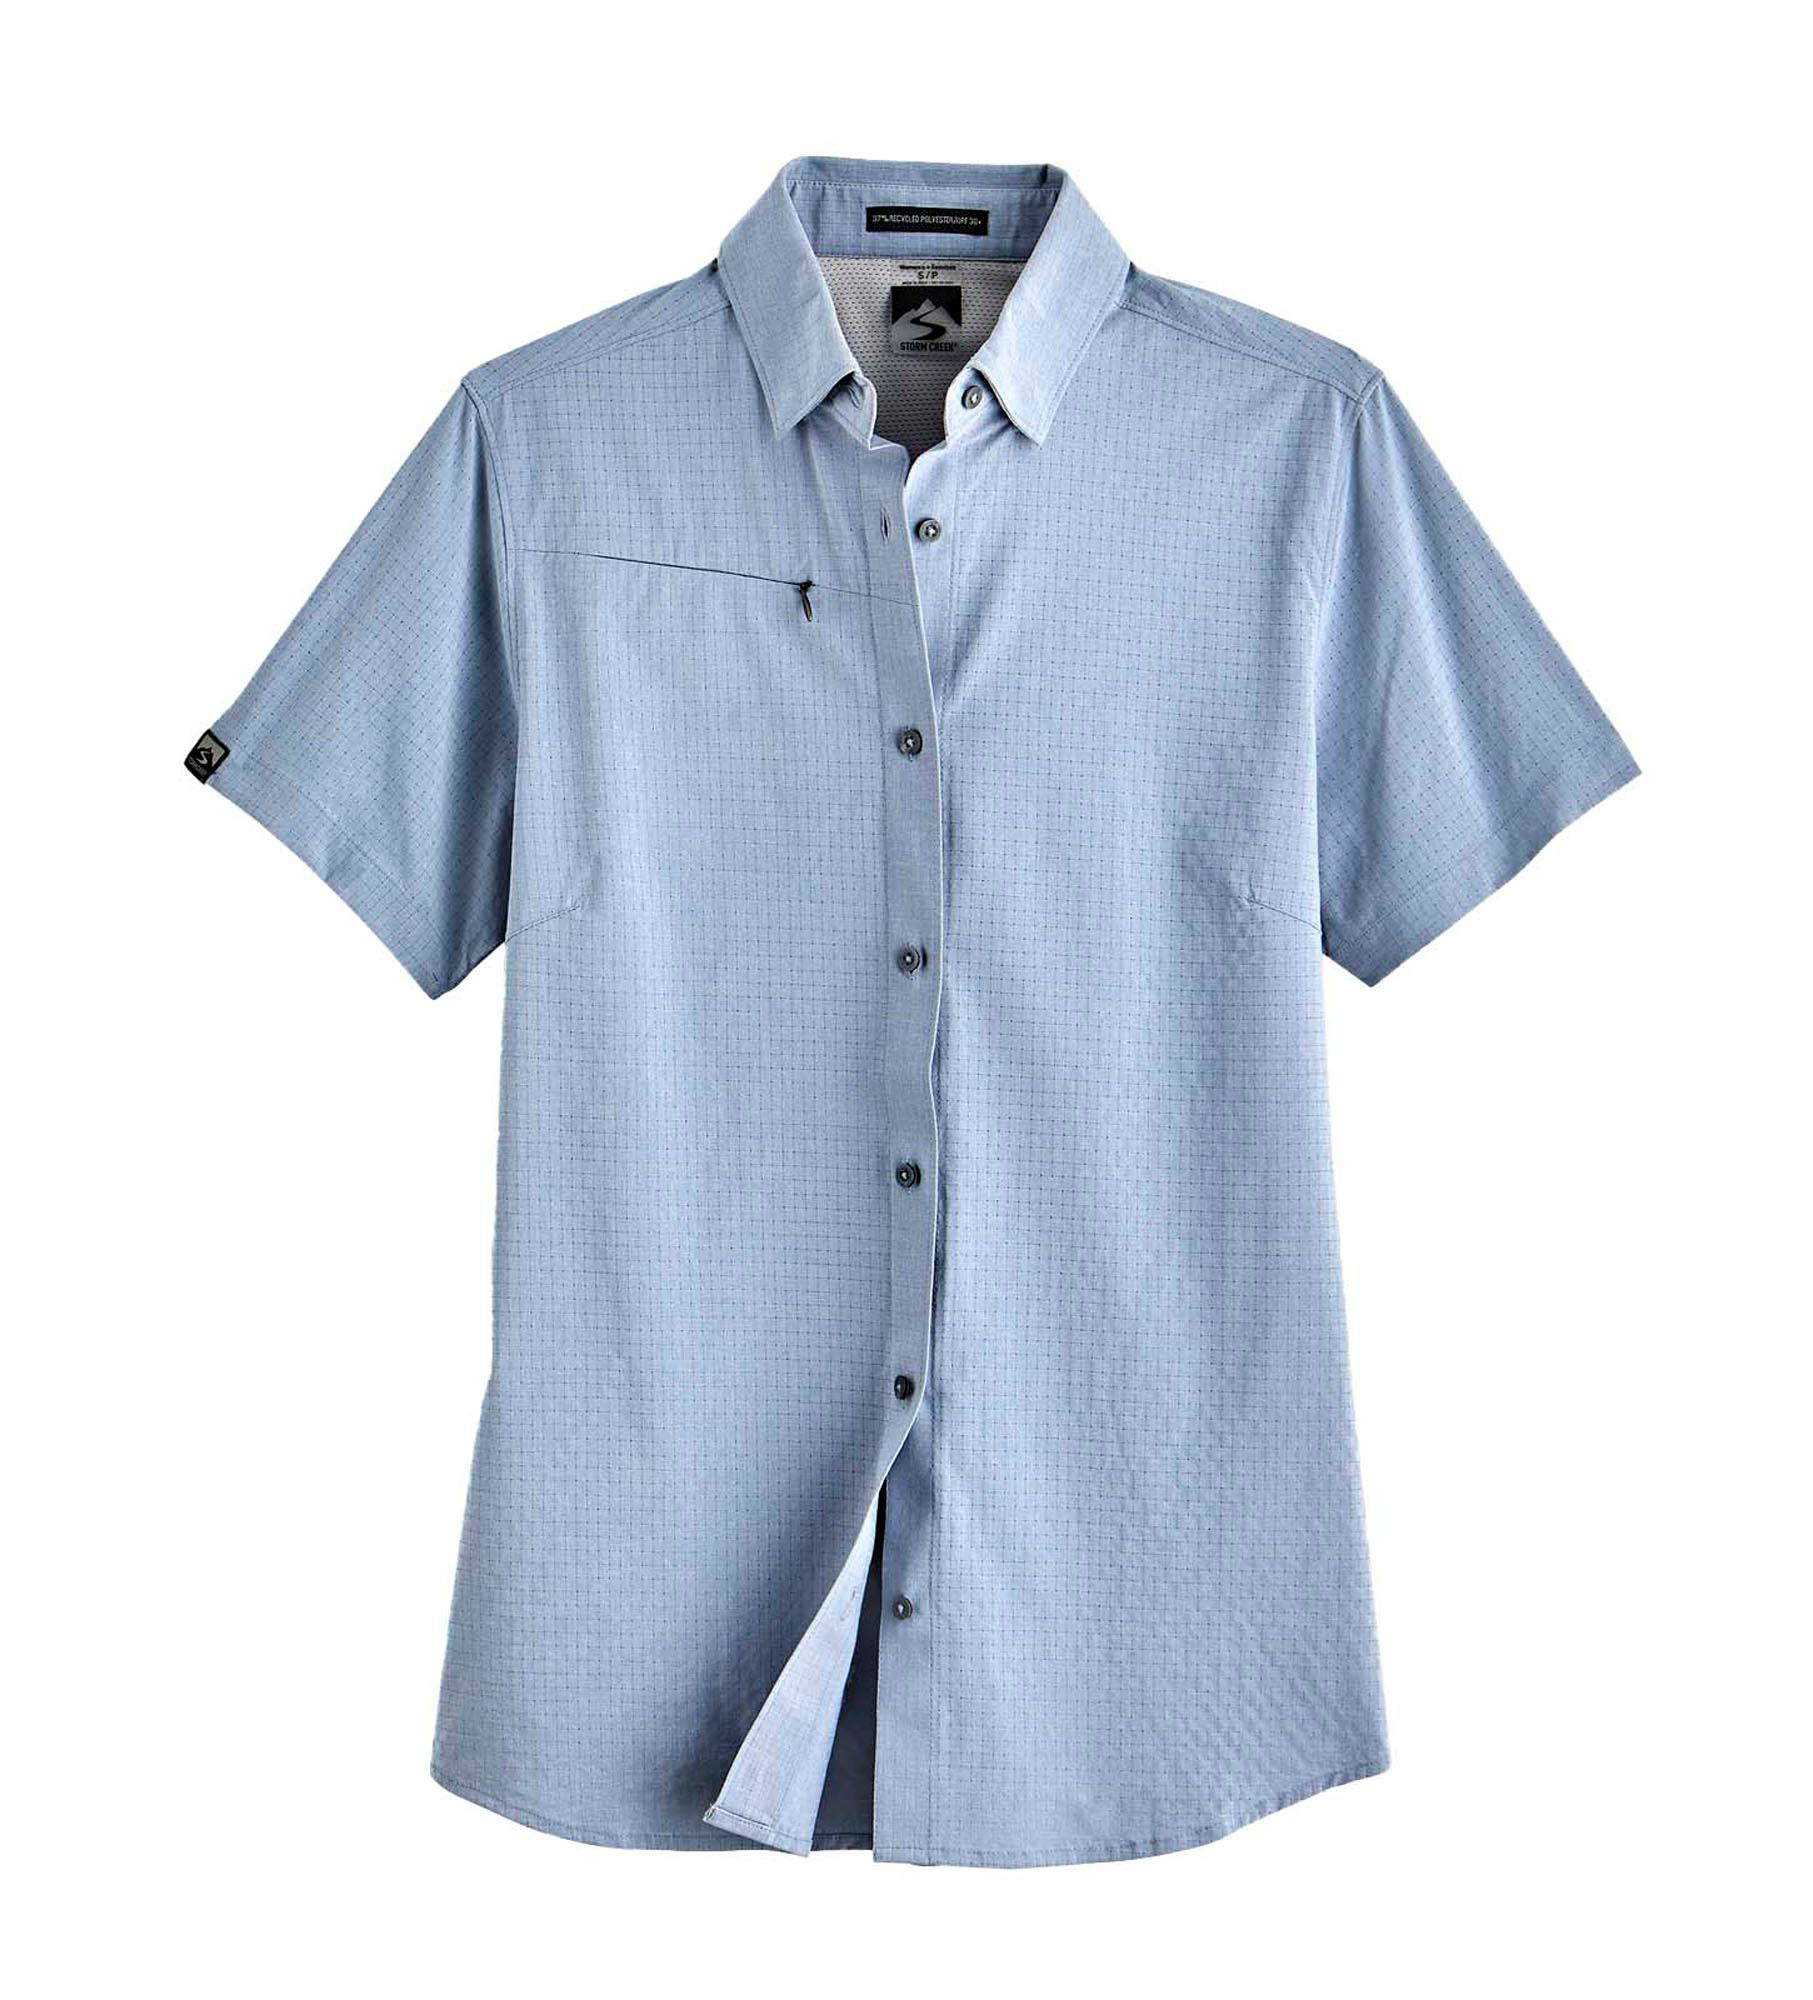 Storm Creek Naturalist Short-Sleeve Shirt for Ladies - Blue Mist - 2XL